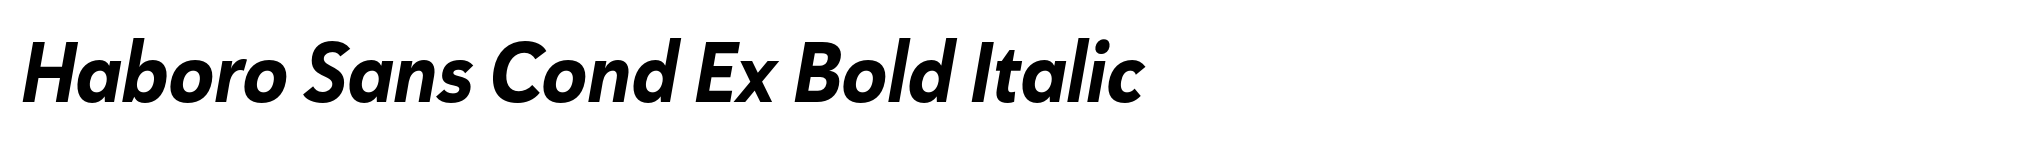 Haboro Sans Cond Ex Bold Italic image